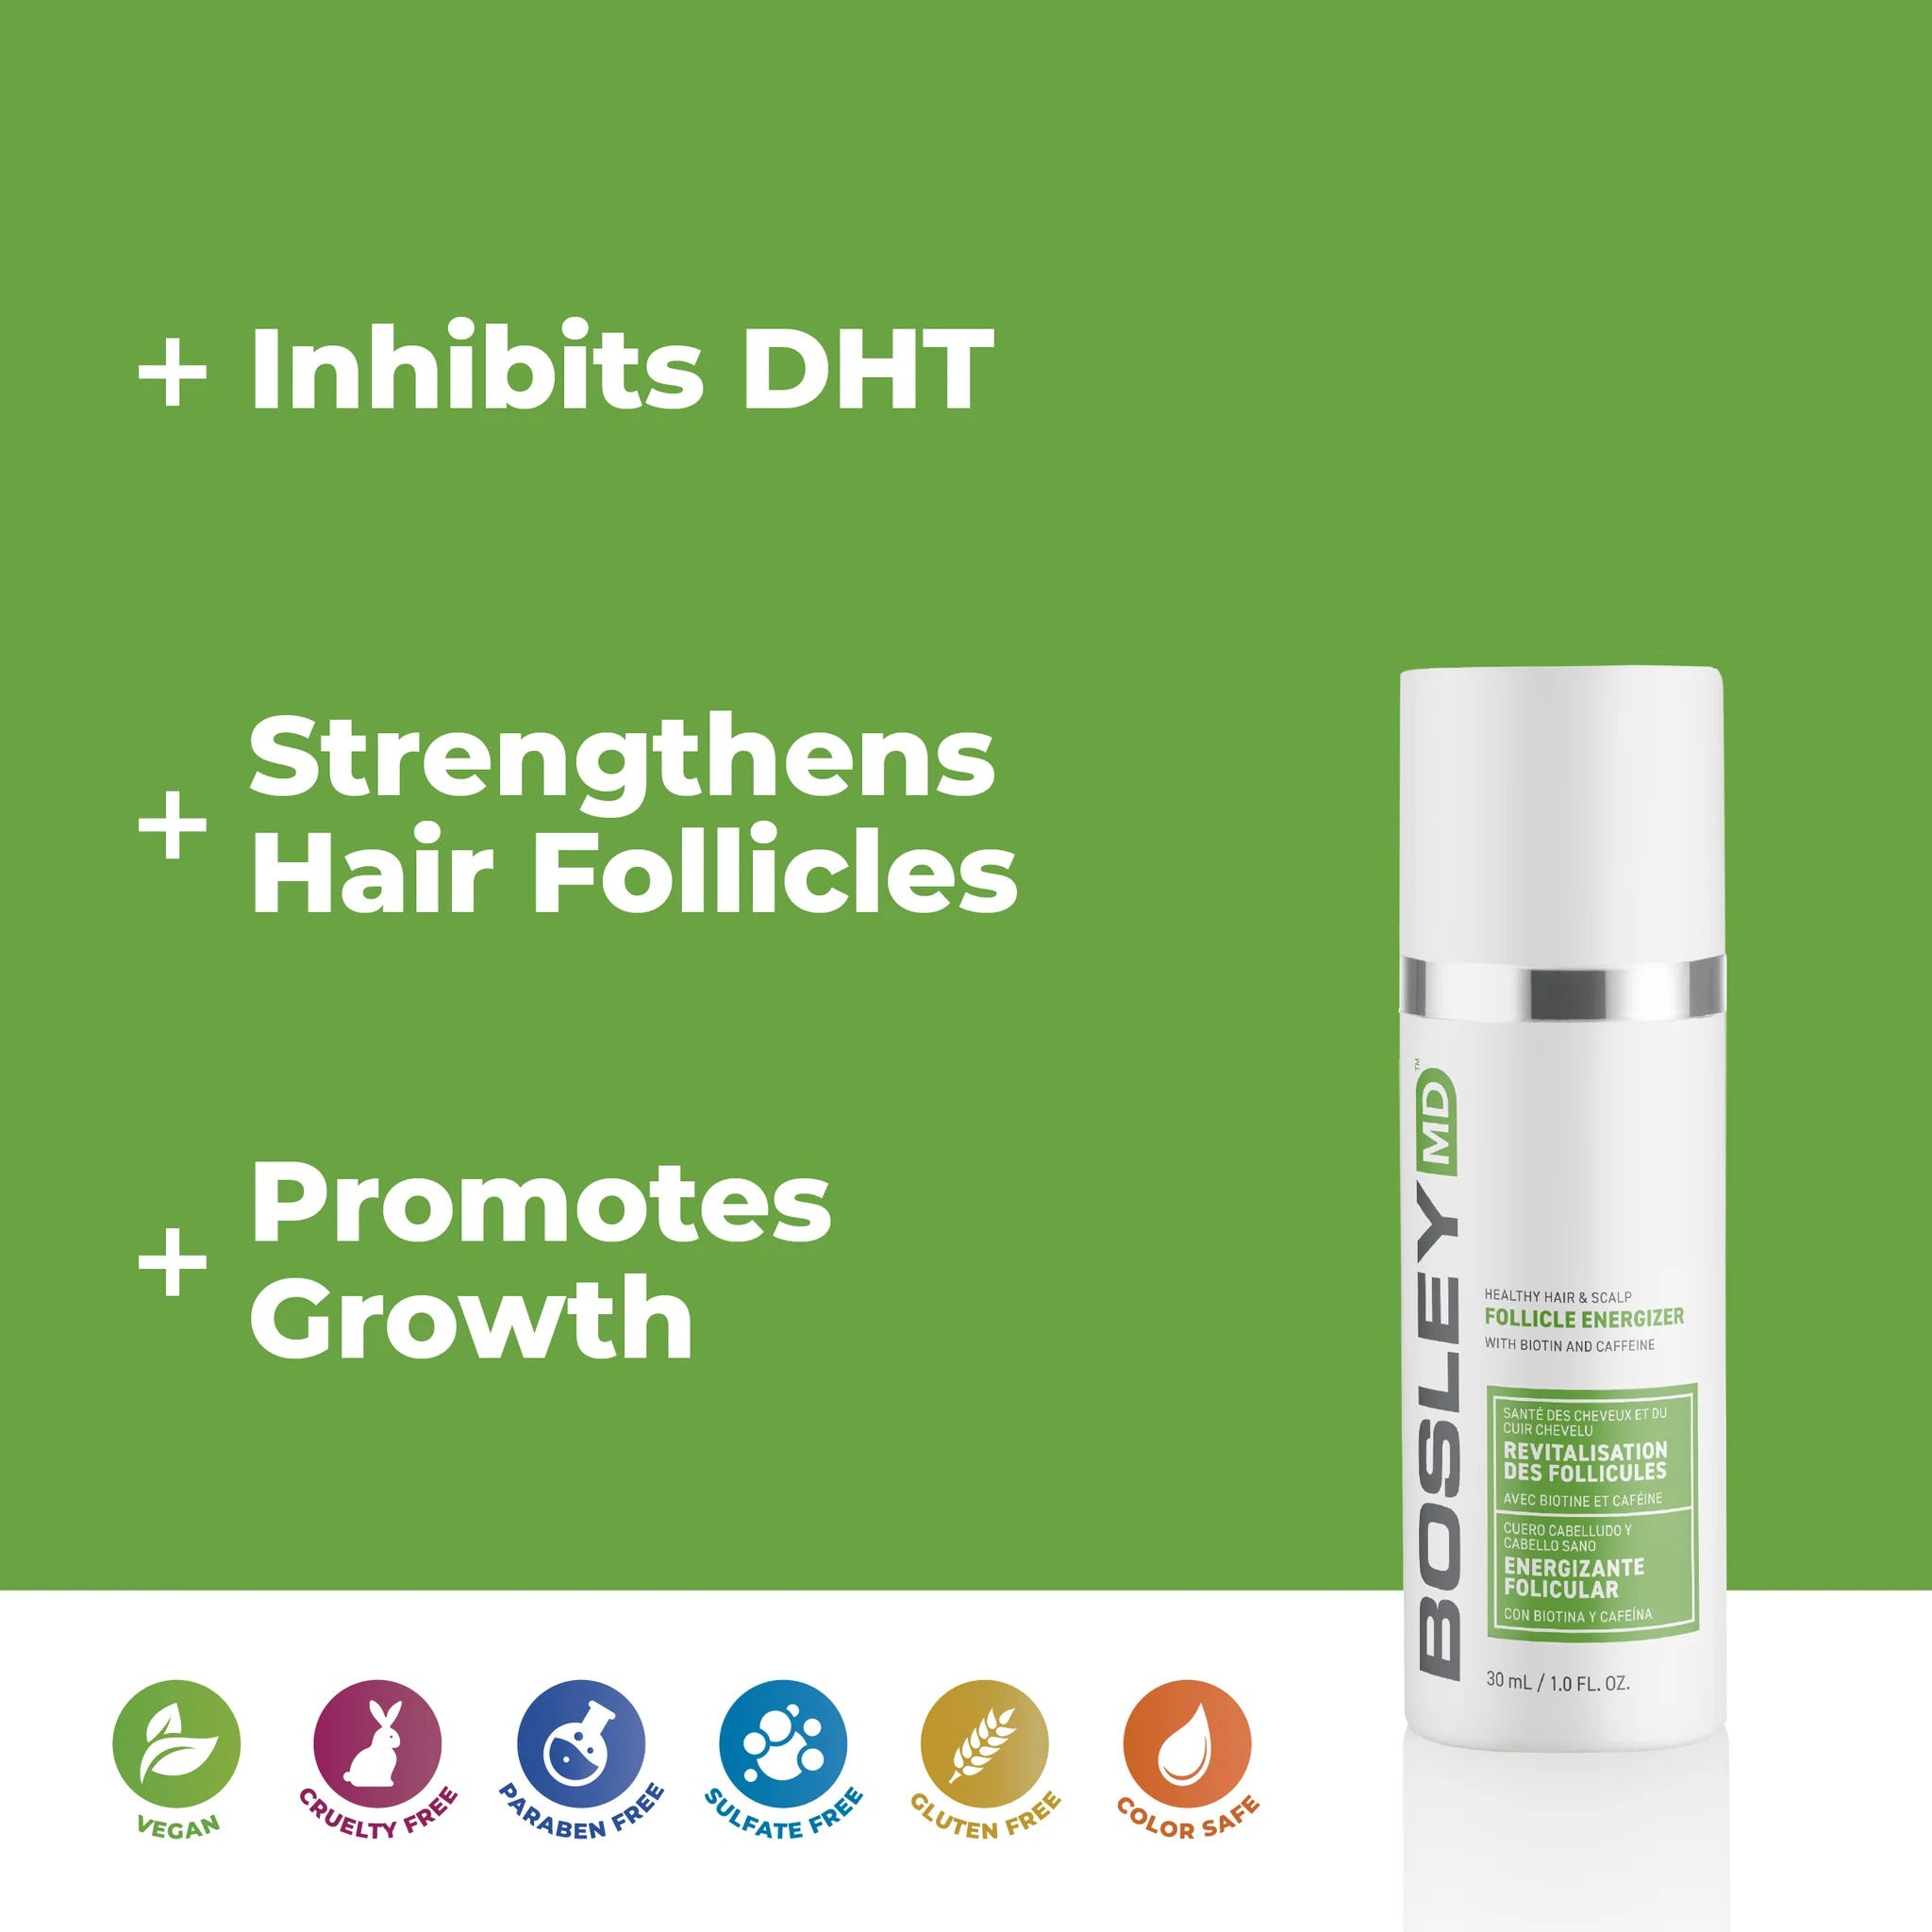 BosleyMD Healthy Hair & Scalp Follicle Energizer Benefits